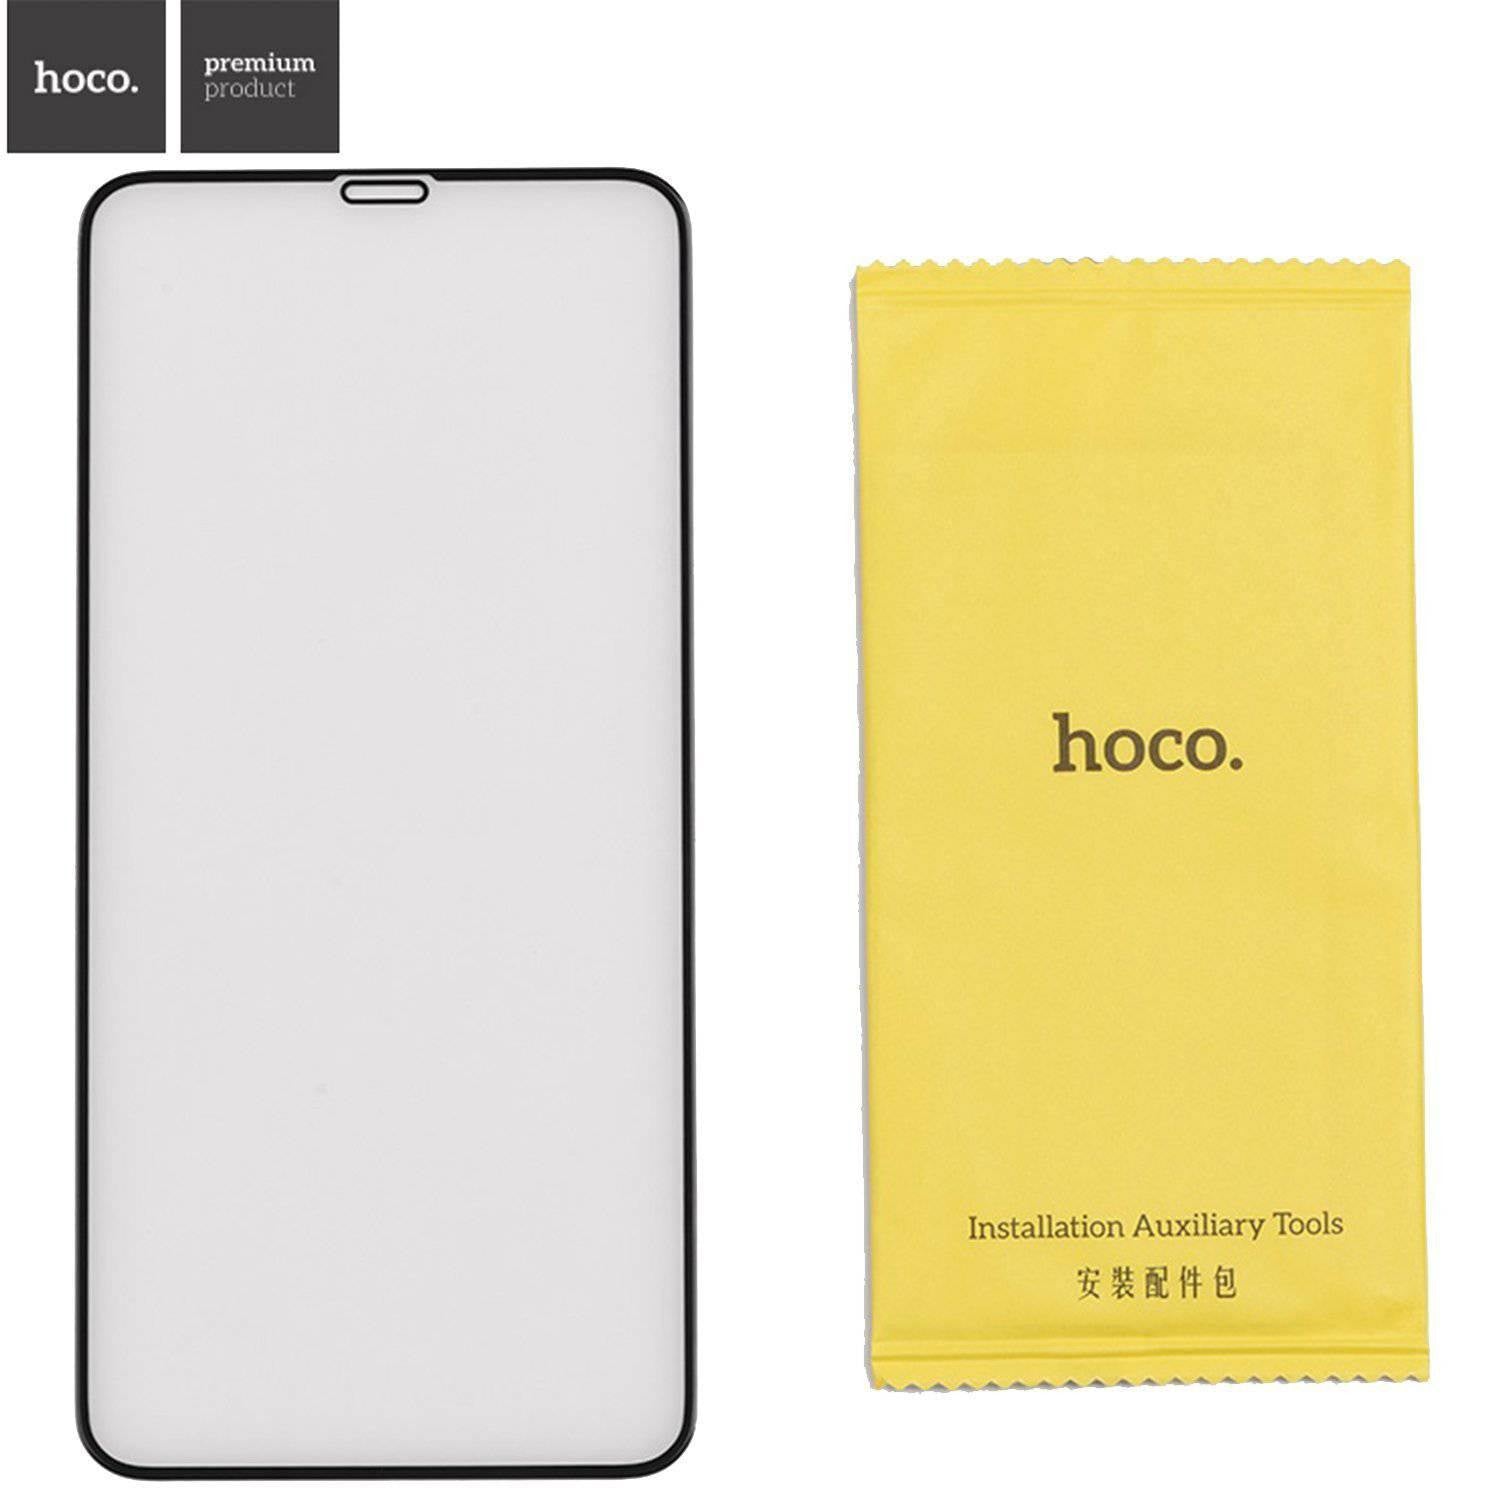 hoco. iPhone X/XS screen protector | Shopna Online Store .